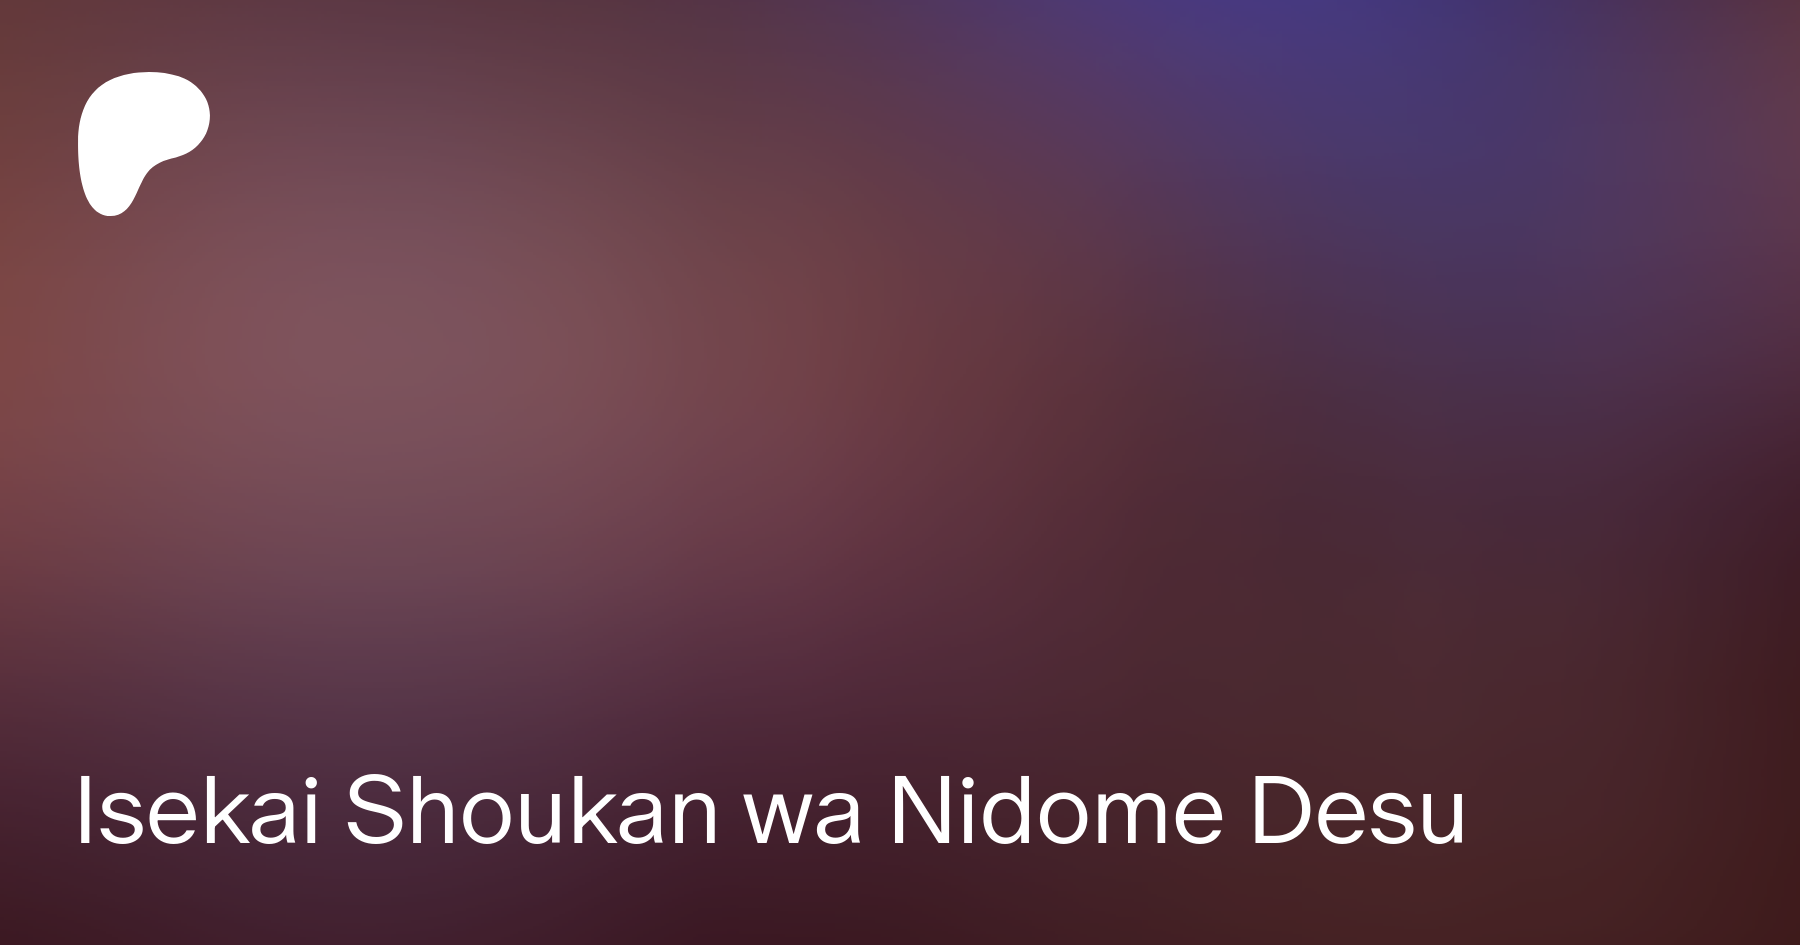 Isekai Shoukan wa Nidome desu - Official Teaser